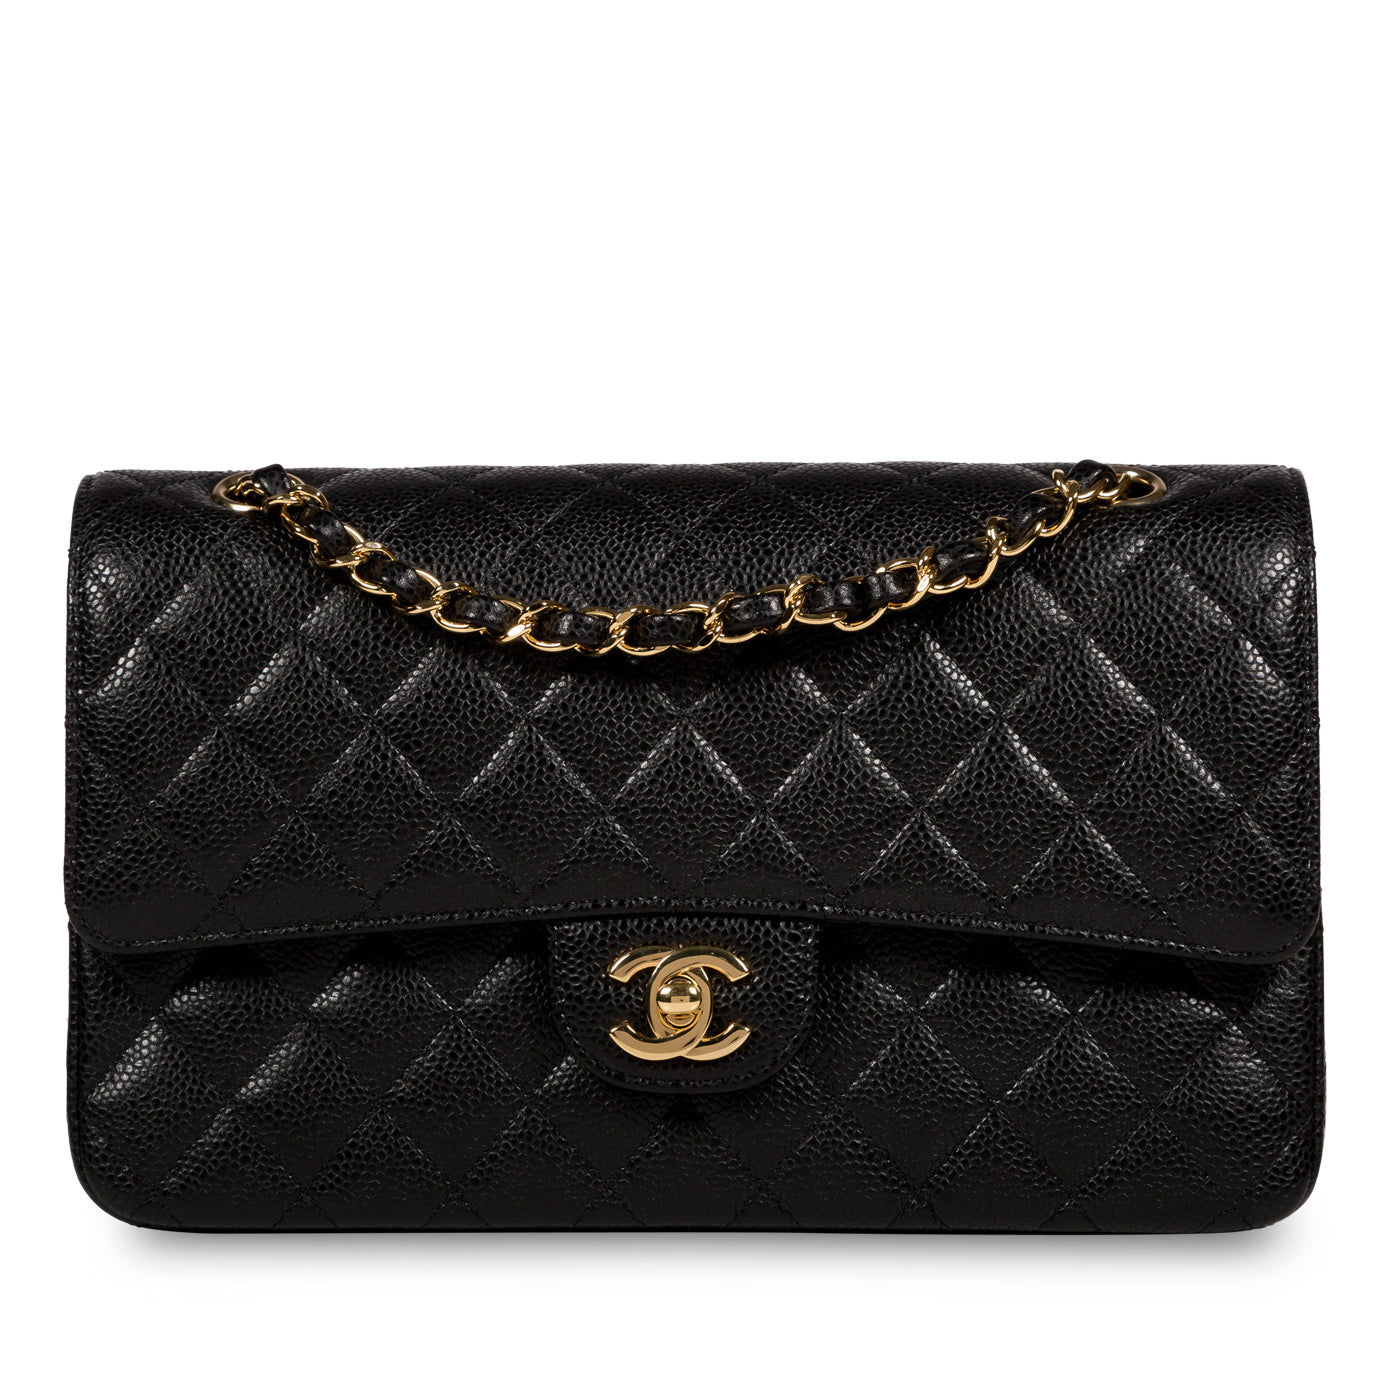 Chanel - Classic Flap Bag - Medium - Black Caviar - GHW - Brand